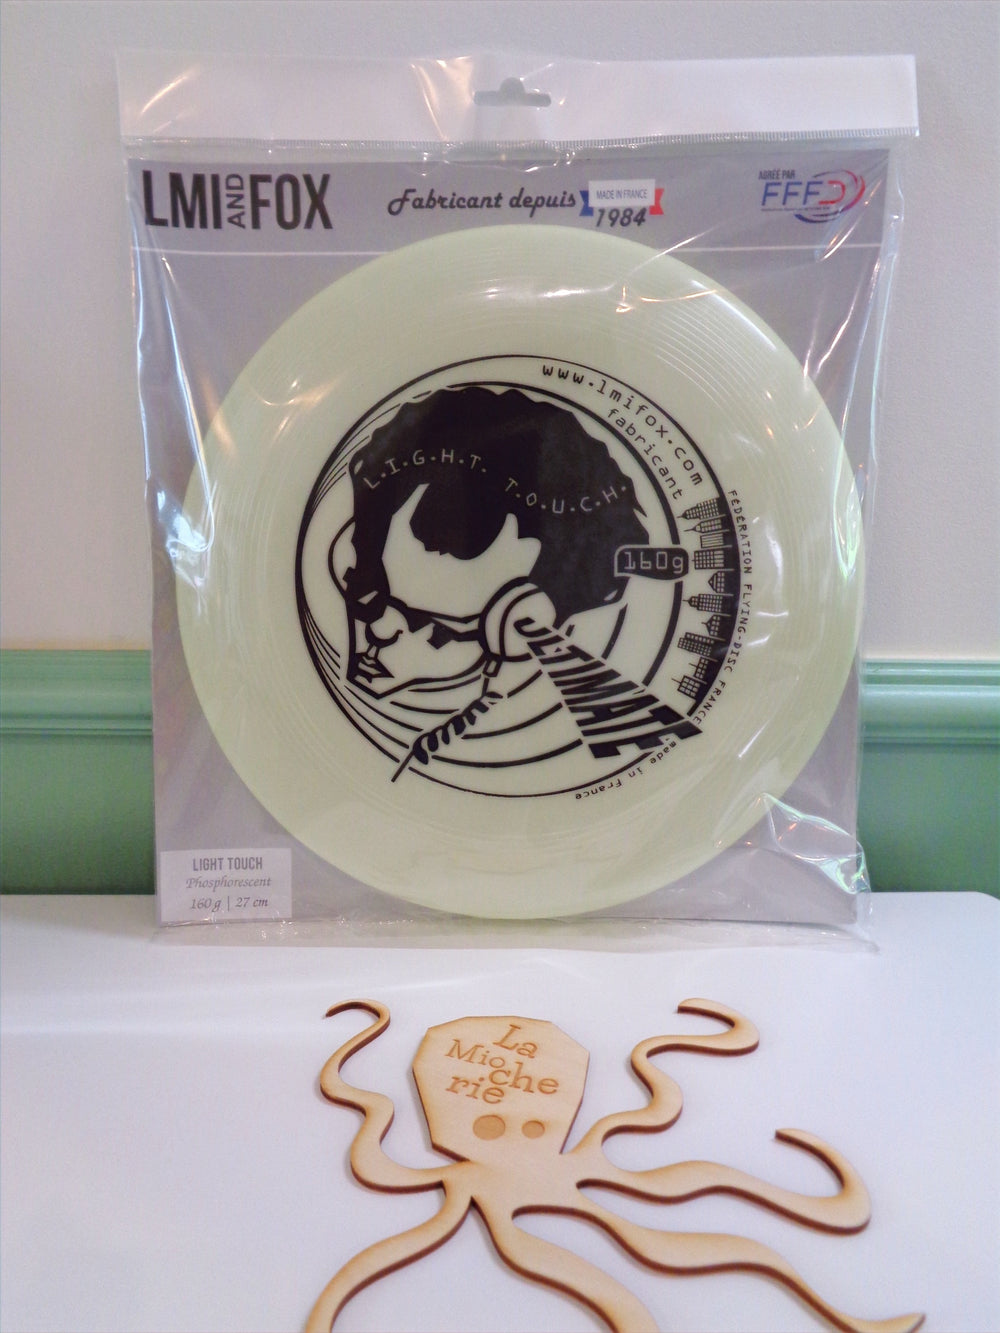 Frisbee "Spiral LIGHT TOUCH" Phospho 160 Lmi &amp; Fox